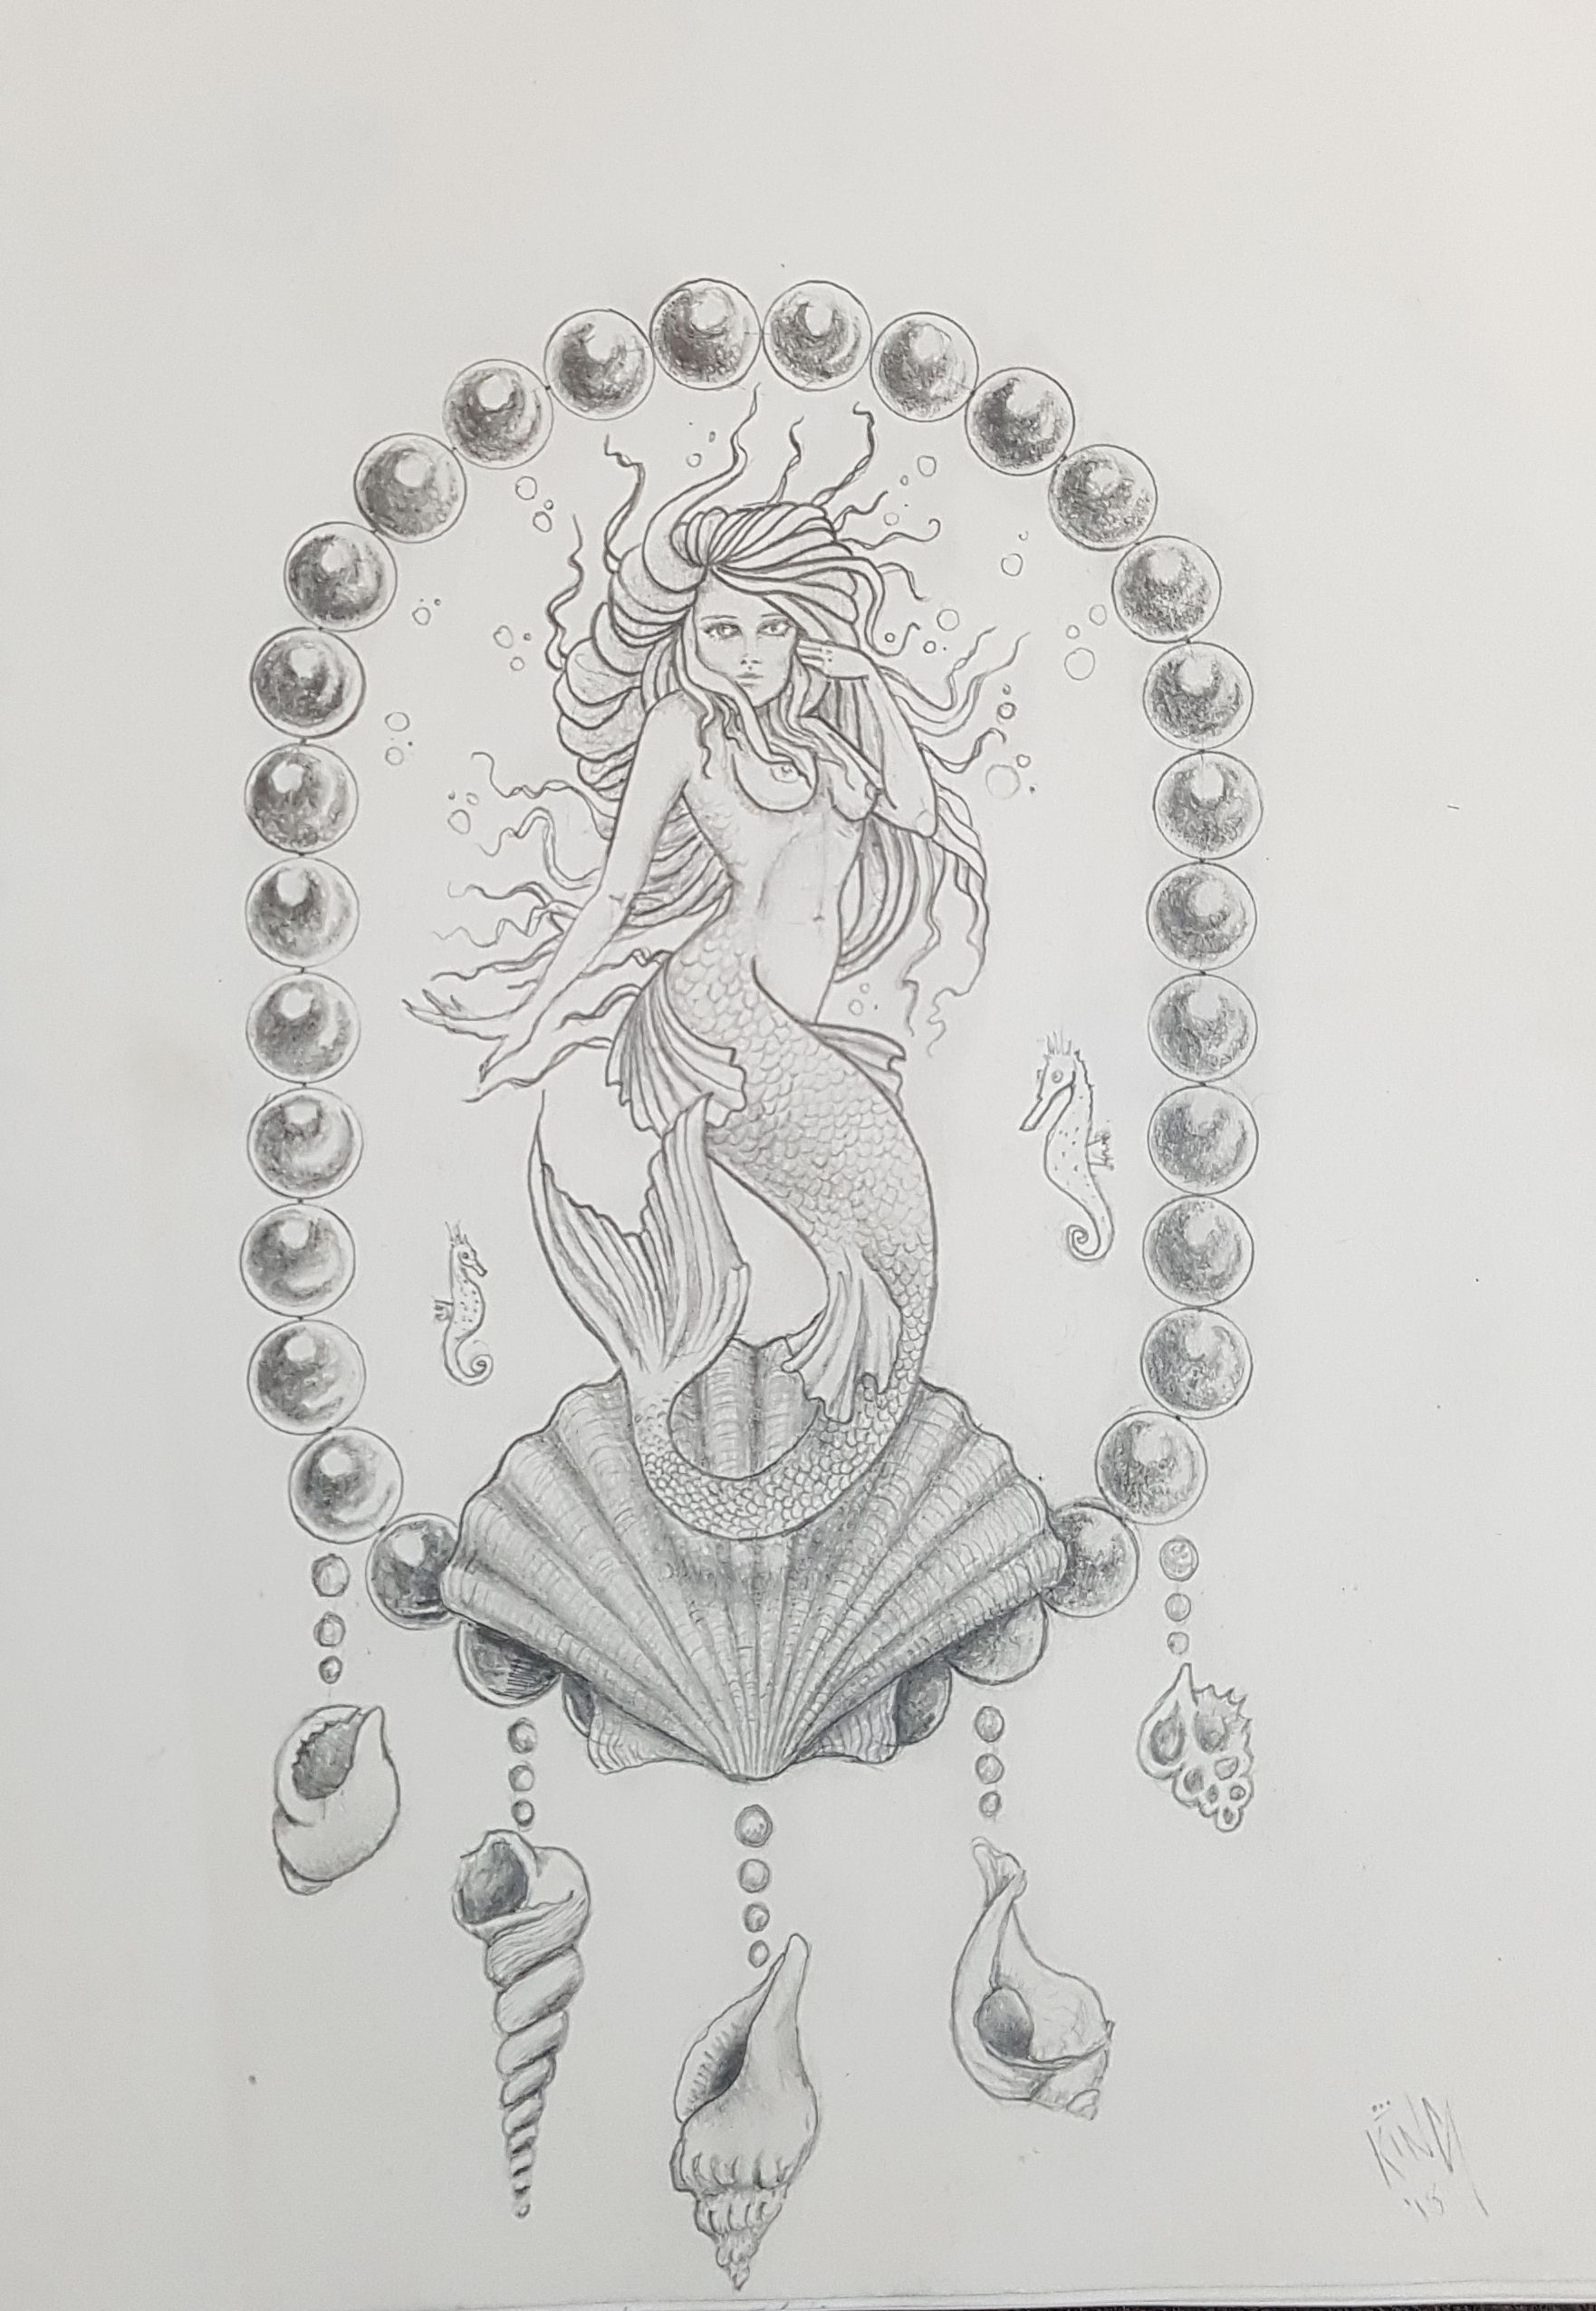 wholesale for sale ocean mermaid temporary tattoo | eBay